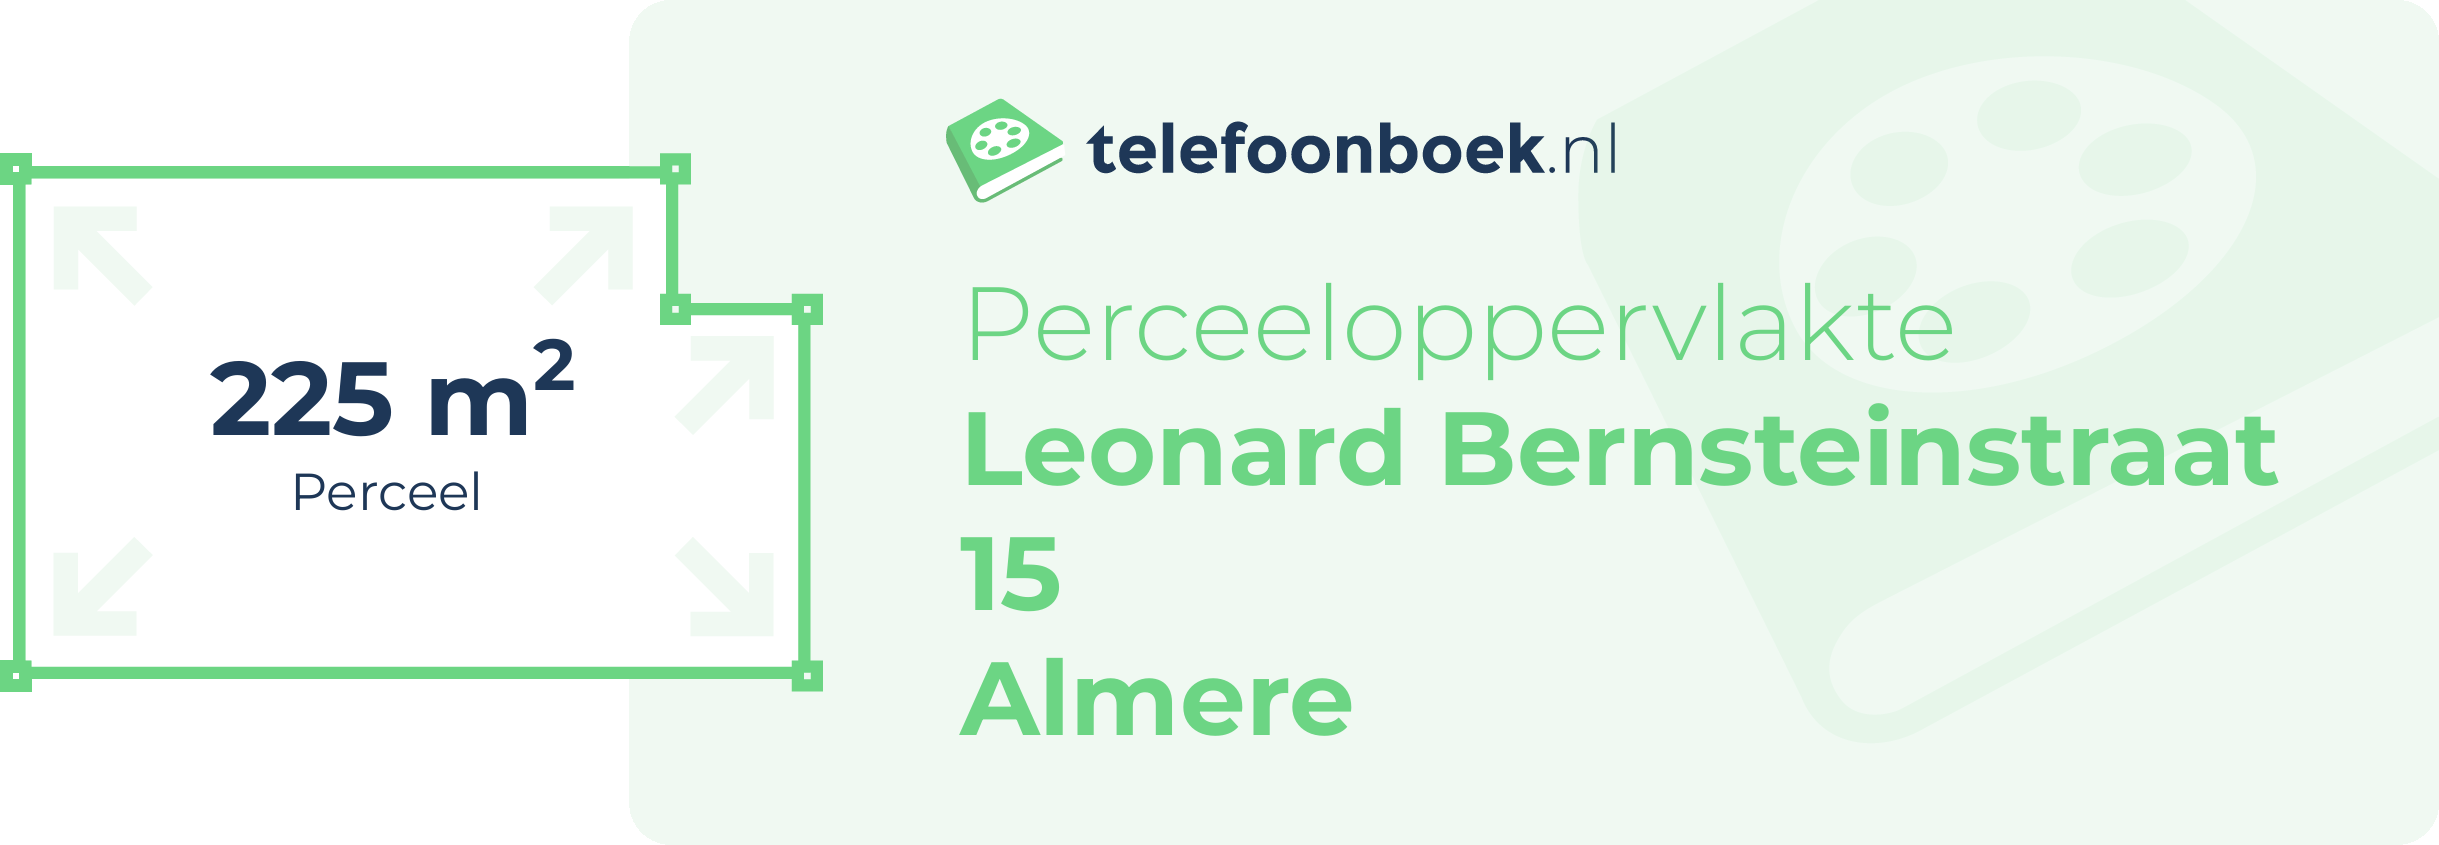 Perceeloppervlakte Leonard Bernsteinstraat 15 Almere